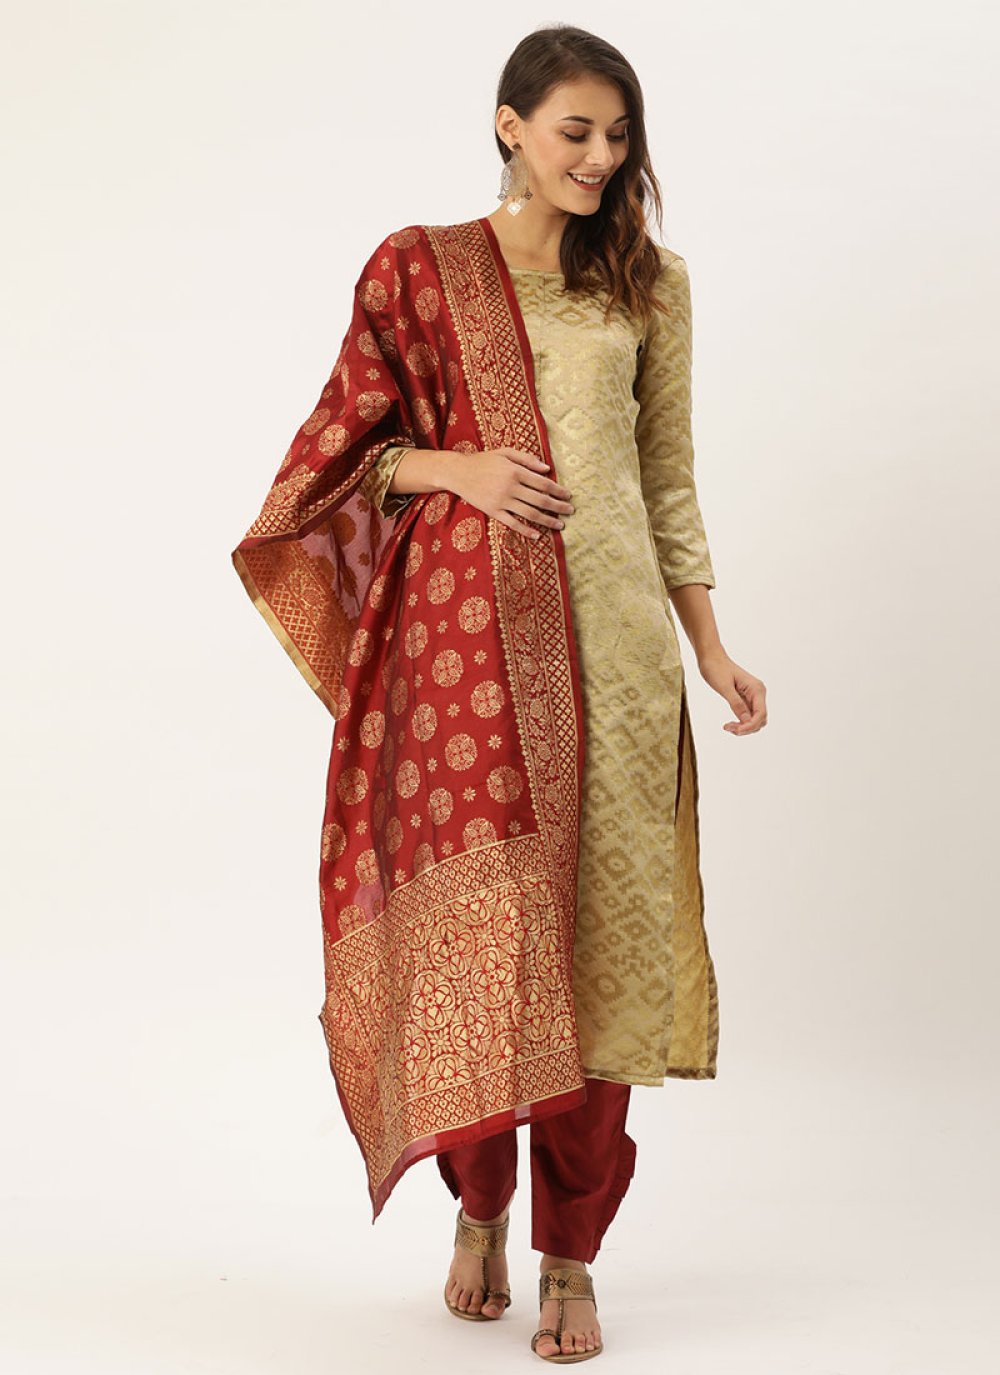 Woven Work Jacquard Pant Style Salwar Suit